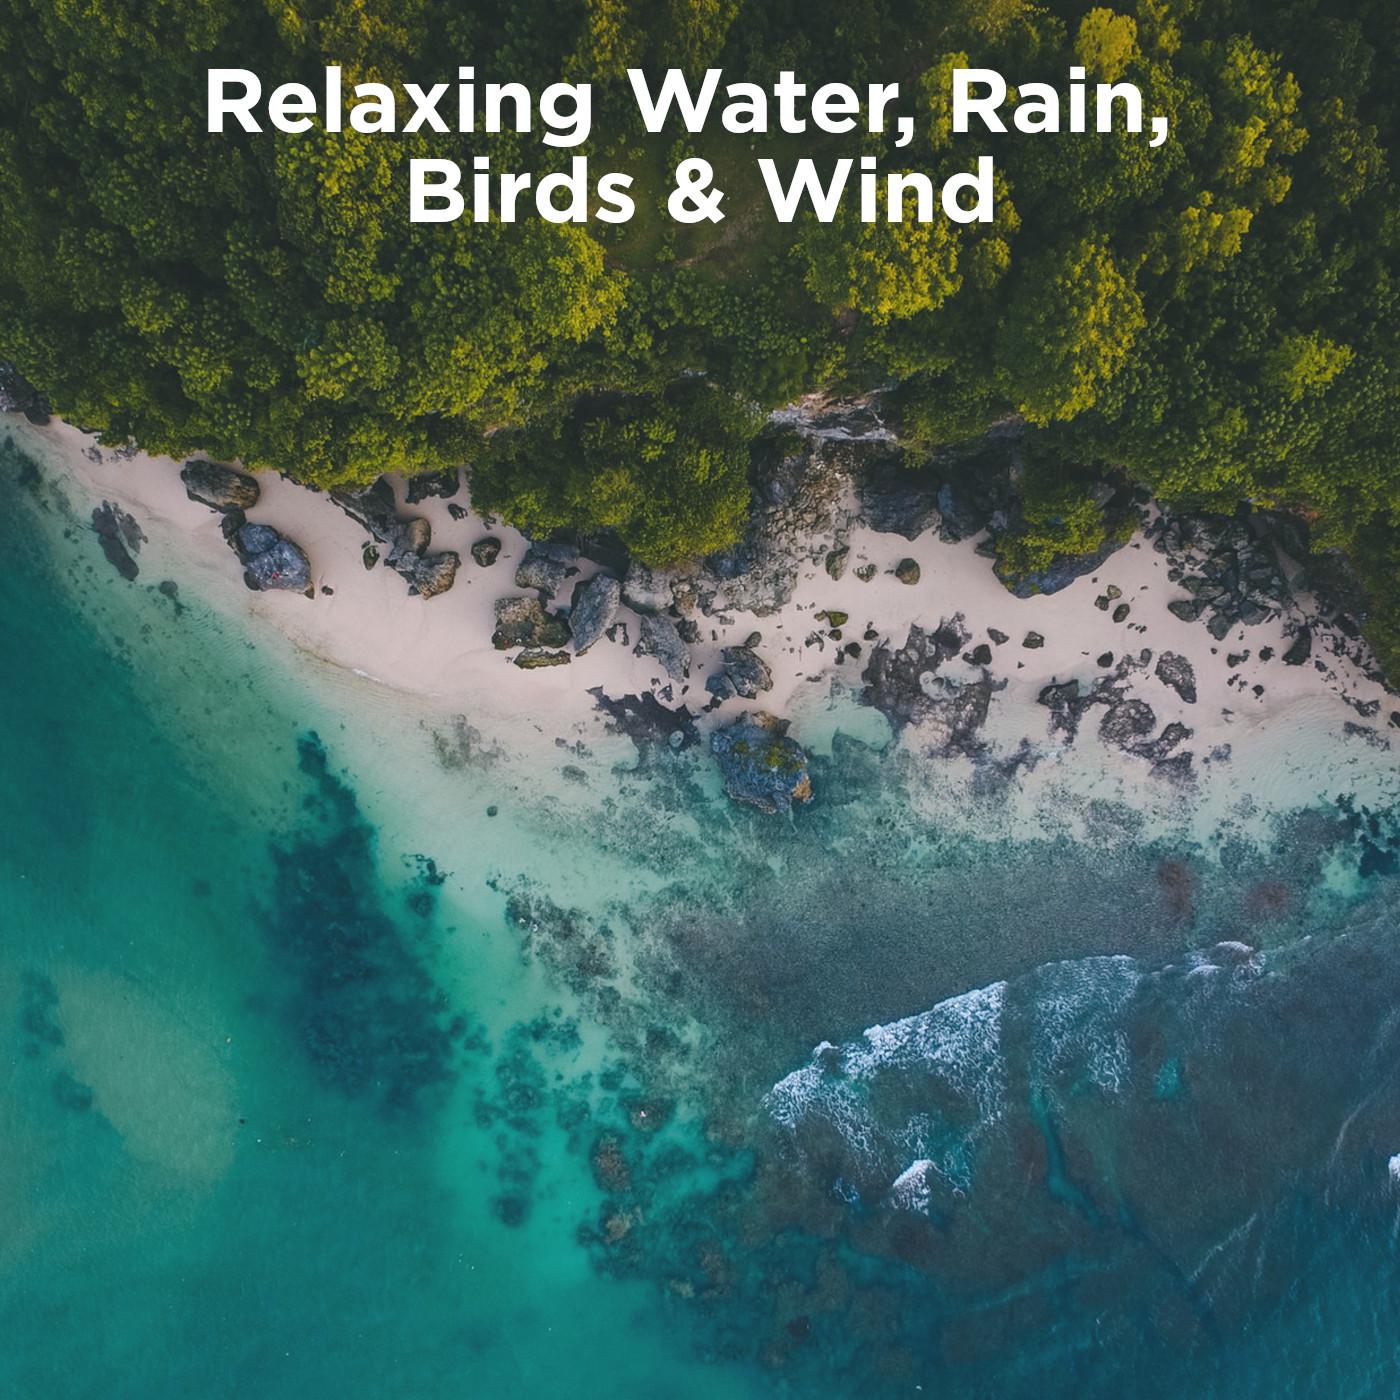 Relaxing Water, Rain, Birds & Wind